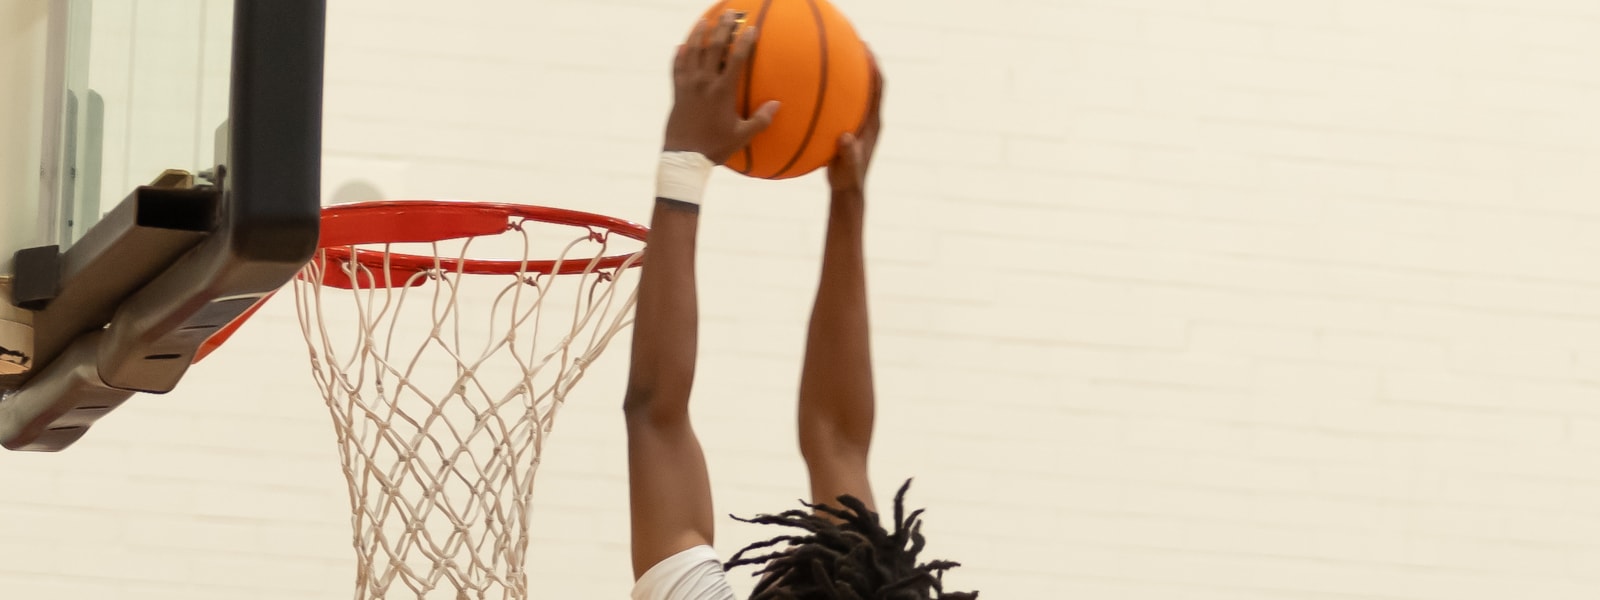 Basketball player dunking ball